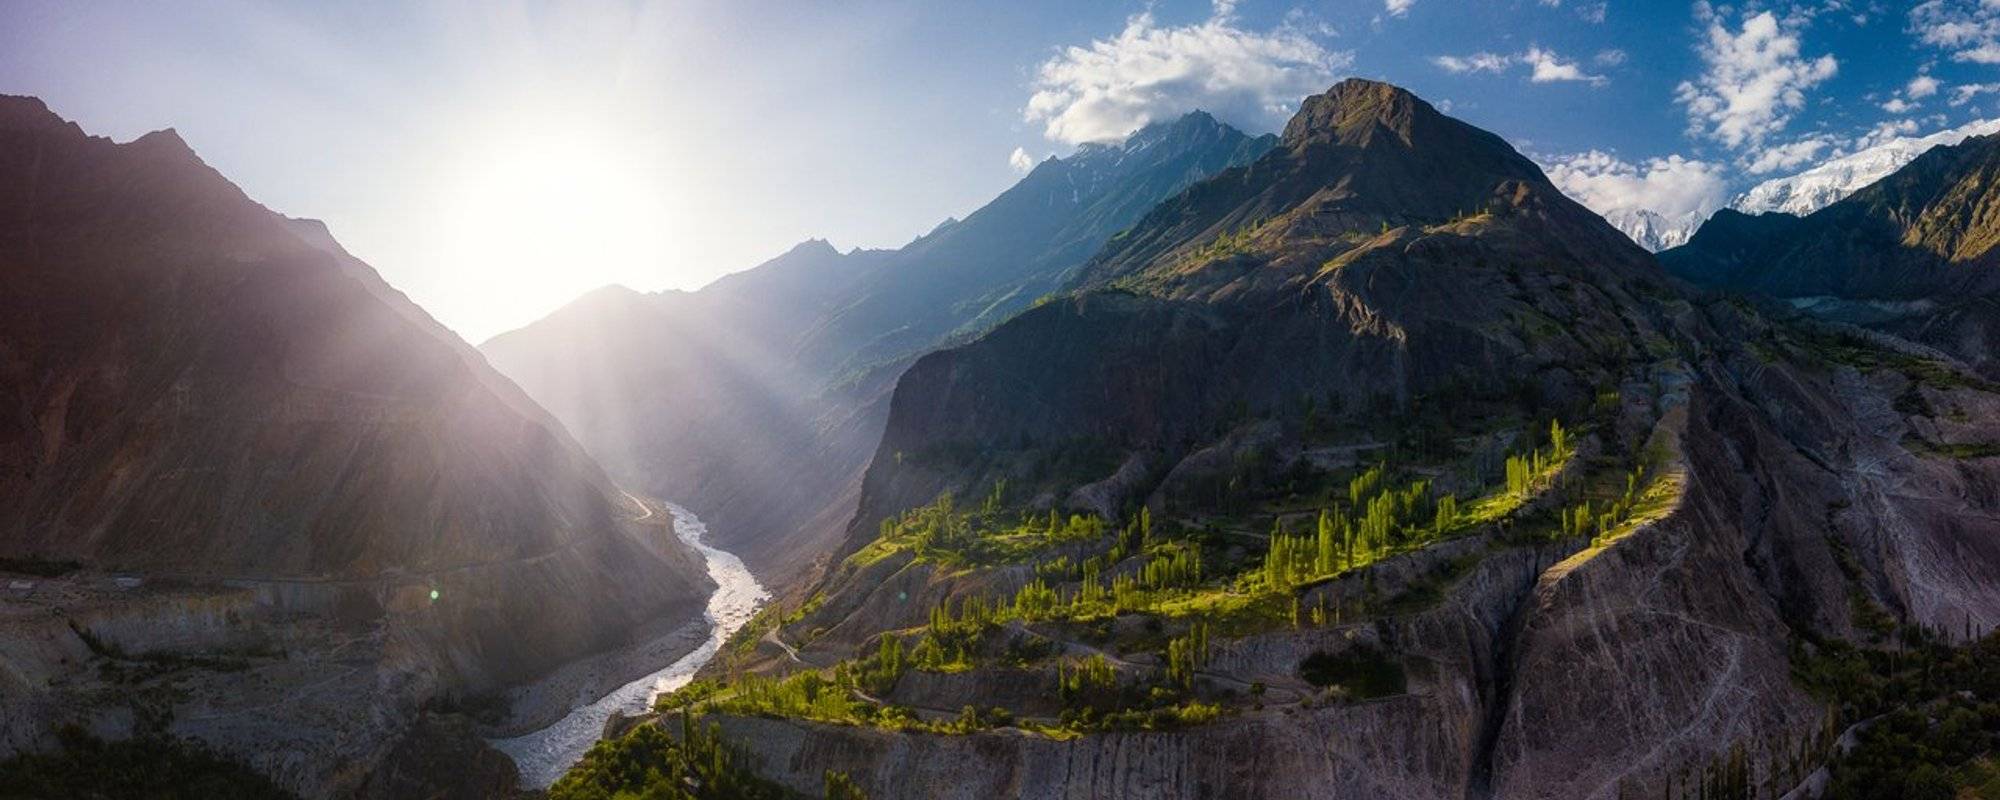 📷 The Land of High Mountains: Pakistan. Day 5. The road to Mount Rakaposhi - Hakapun or Further?